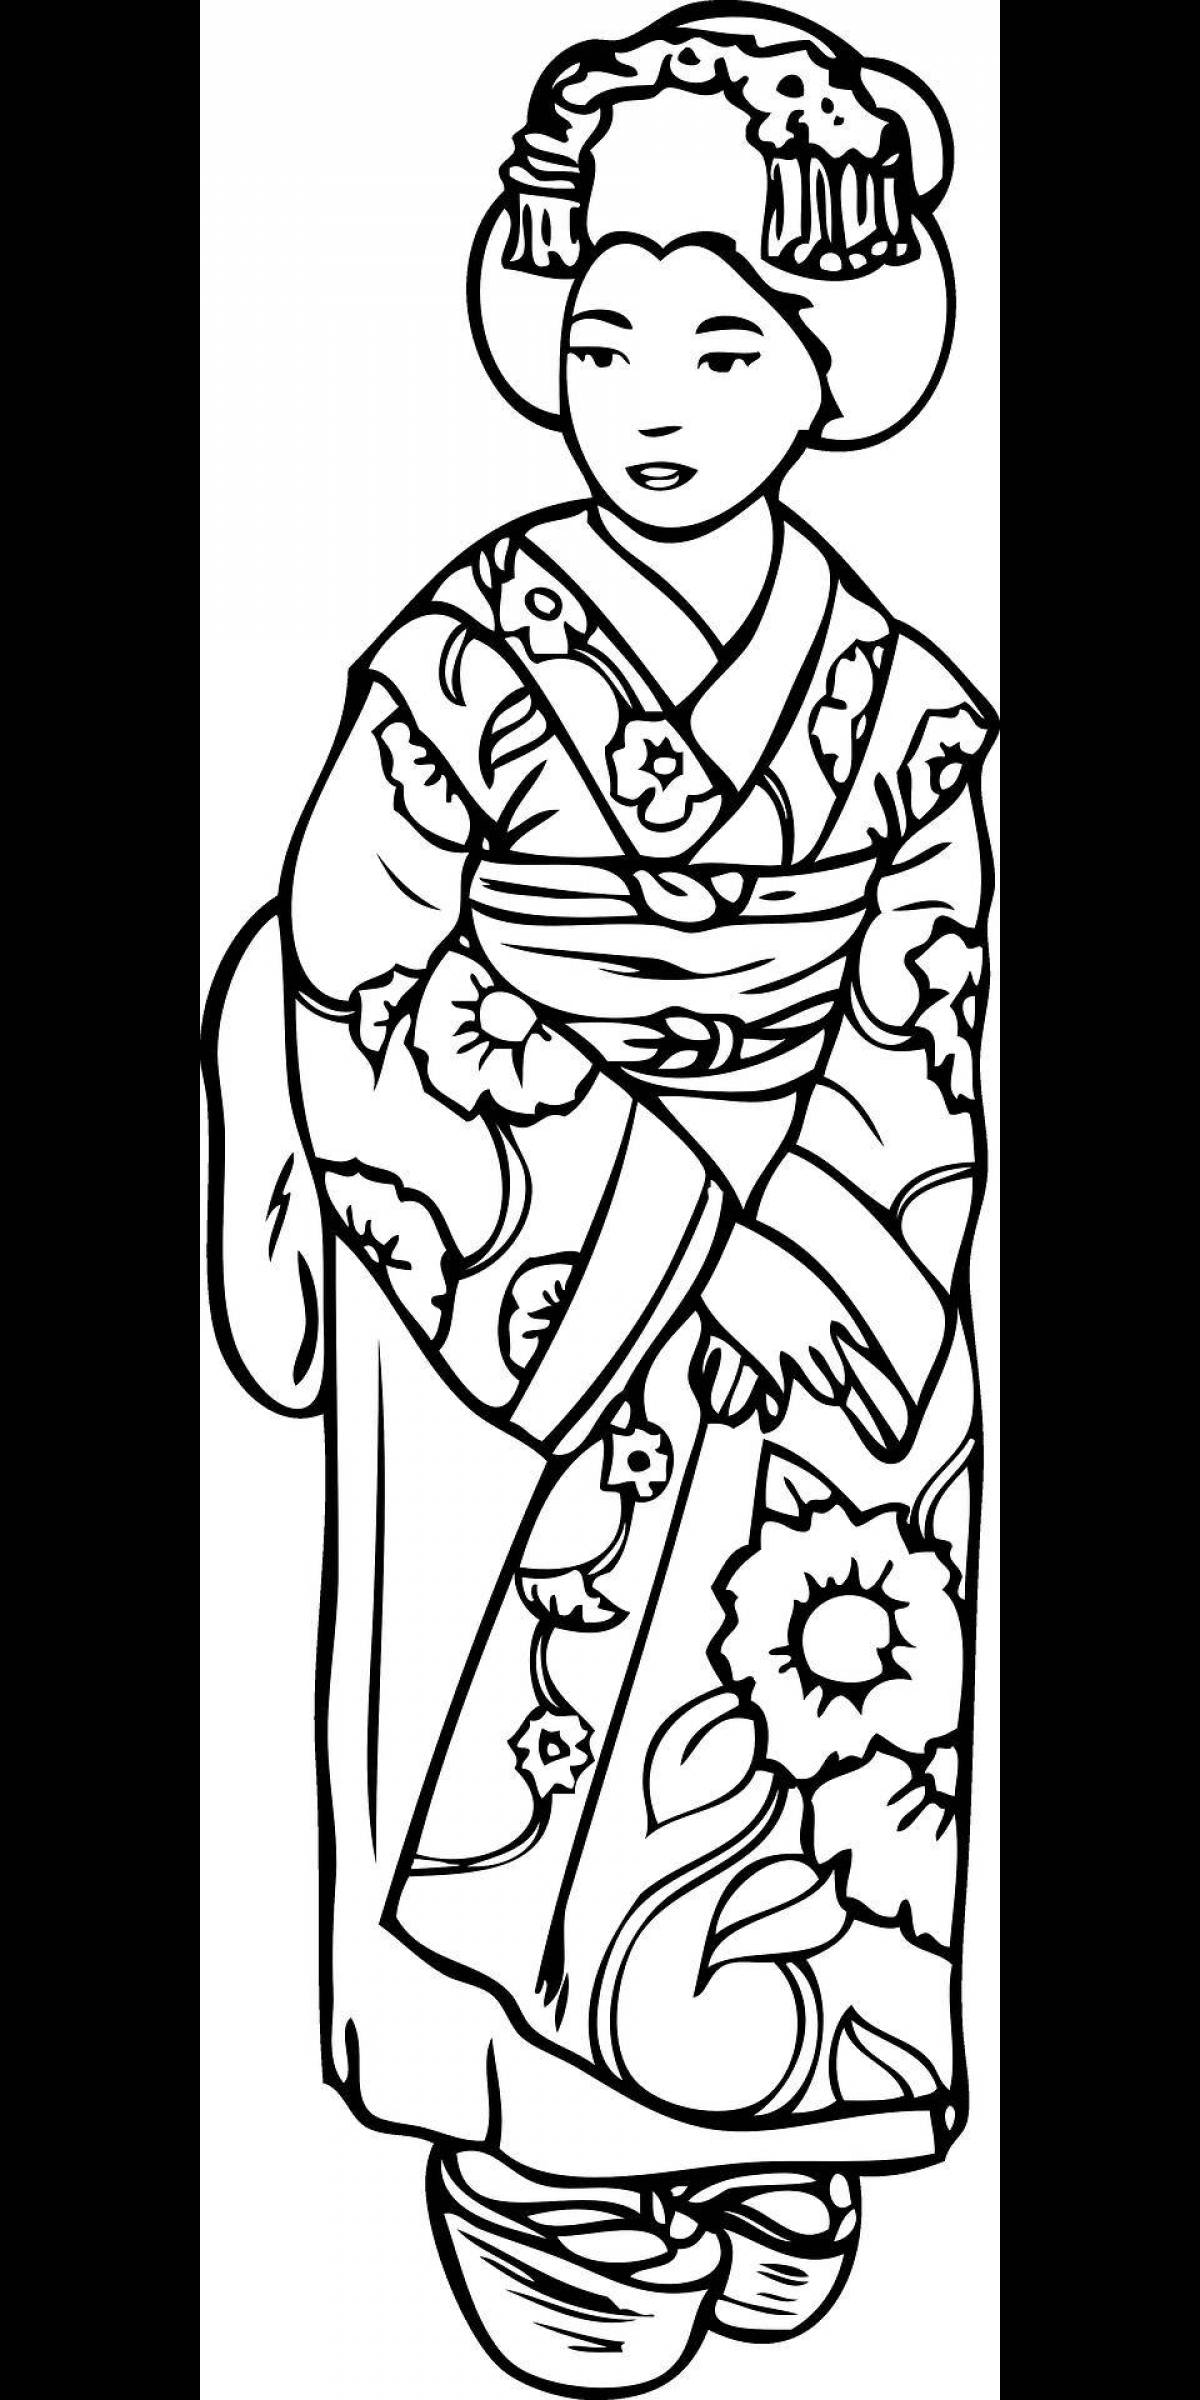 Exquisite kimono coloring page